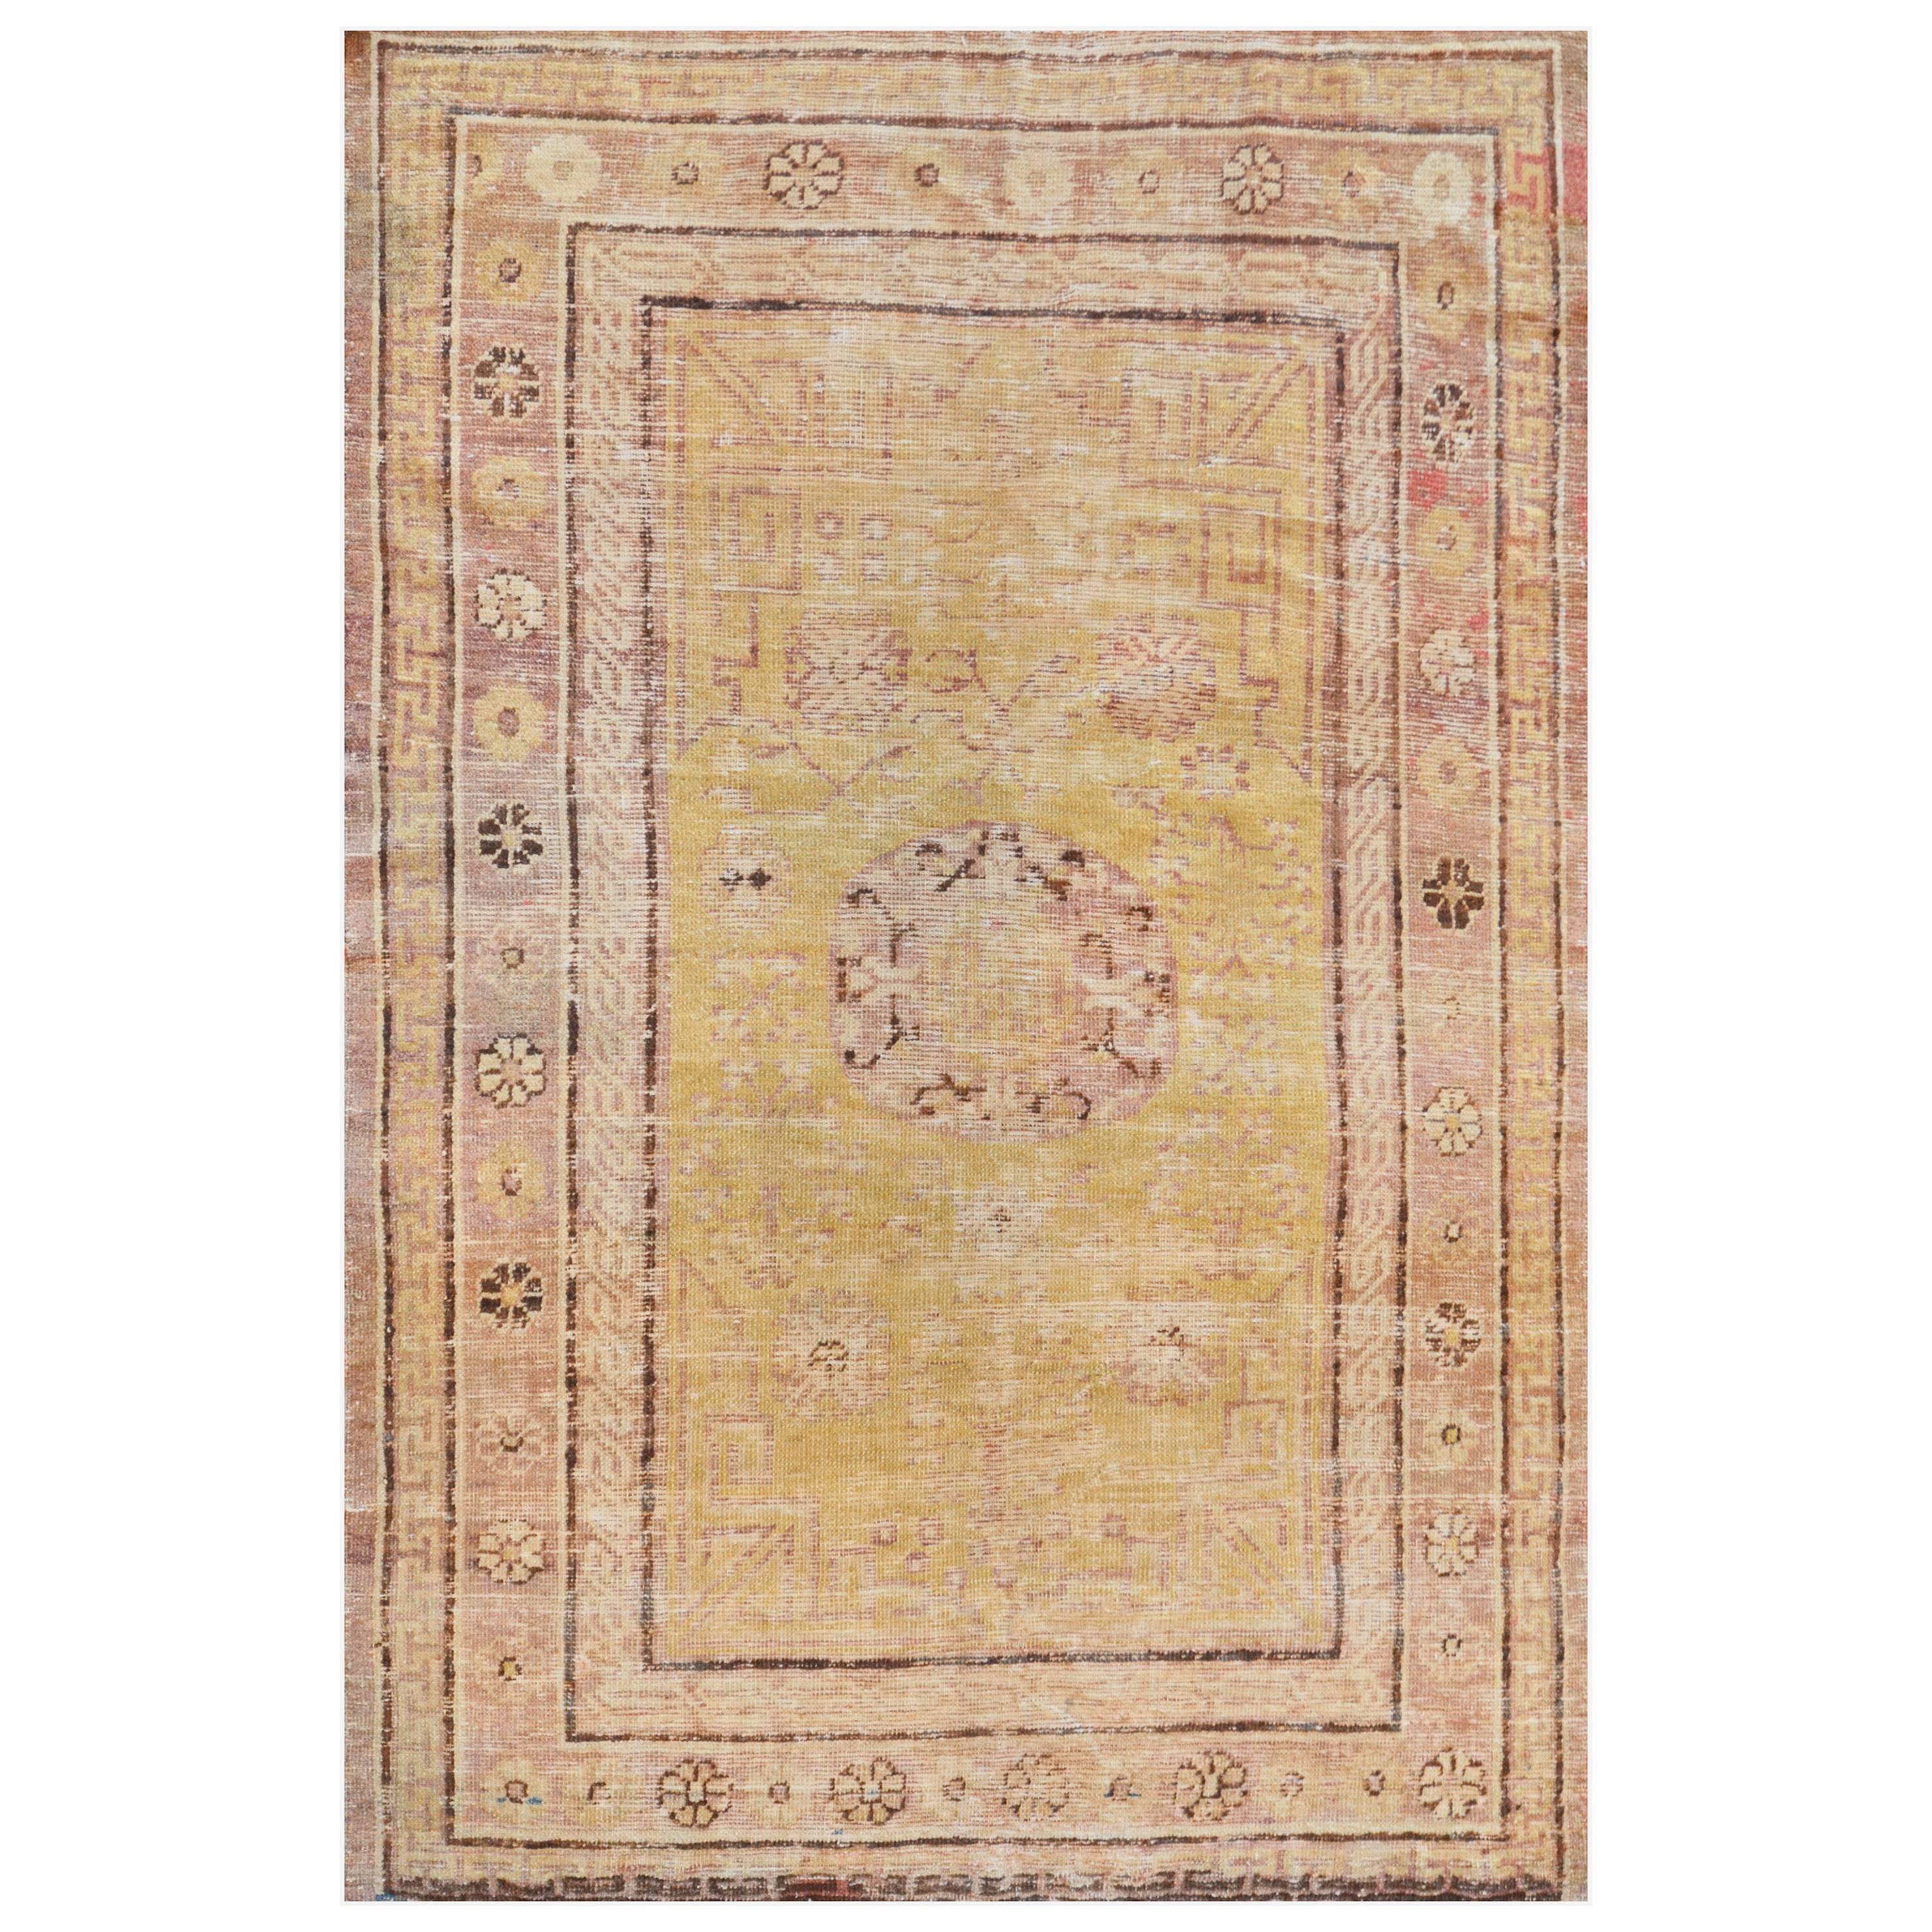 Late 19th Century Khotan Rug from East Turkestan For Sale